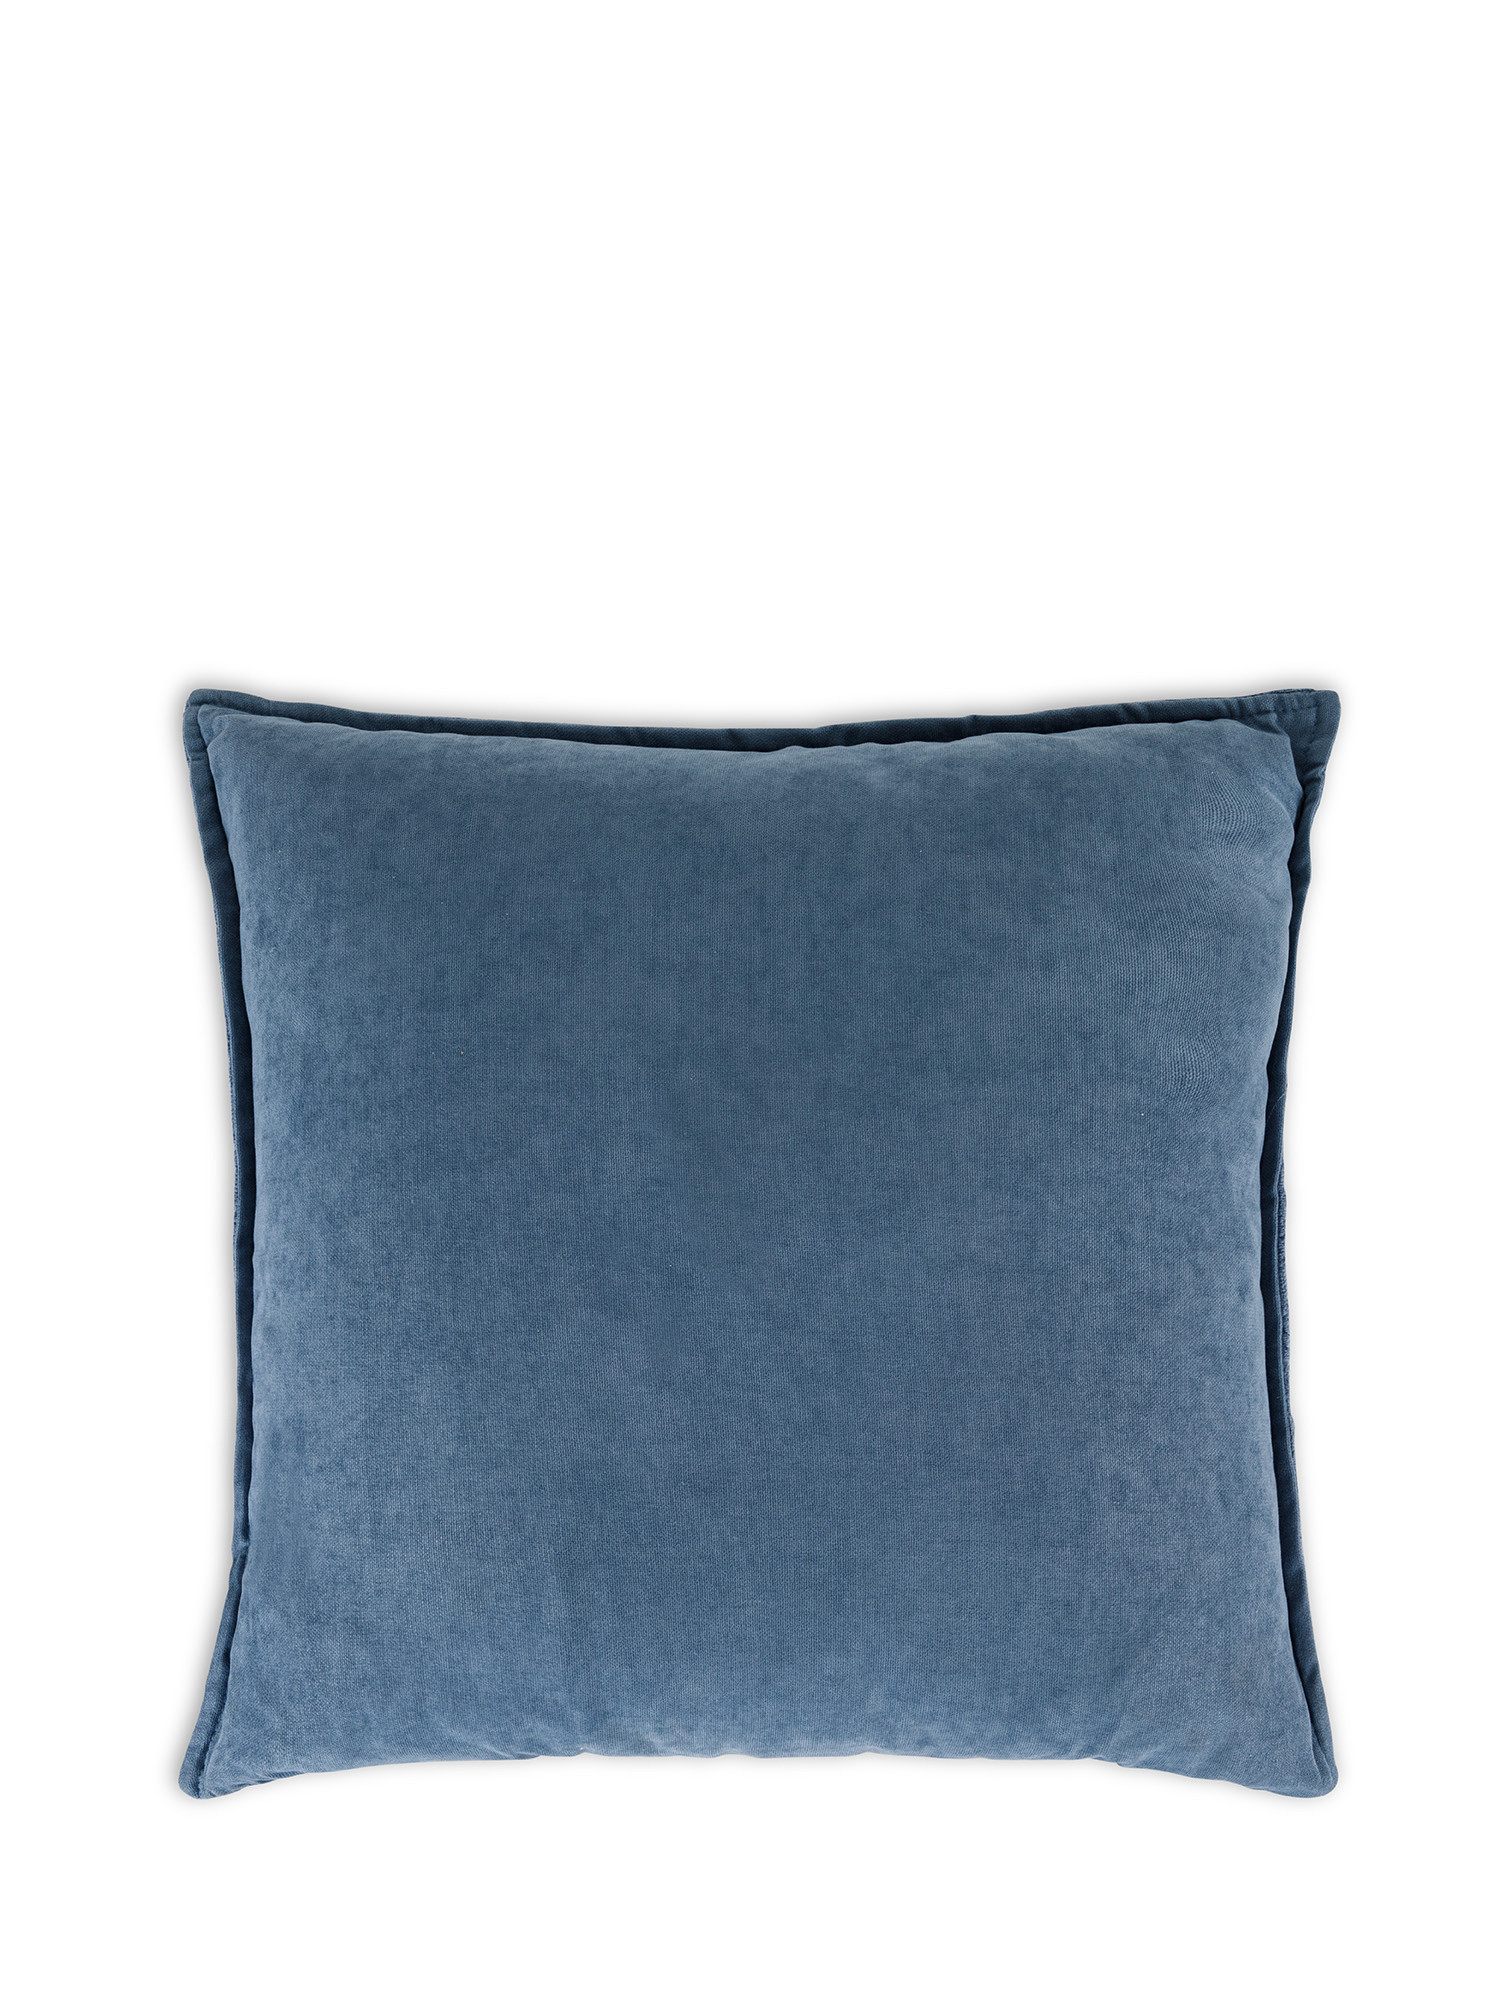 Cusicno tessuto lavato 45x45cm, Blu, large image number 1